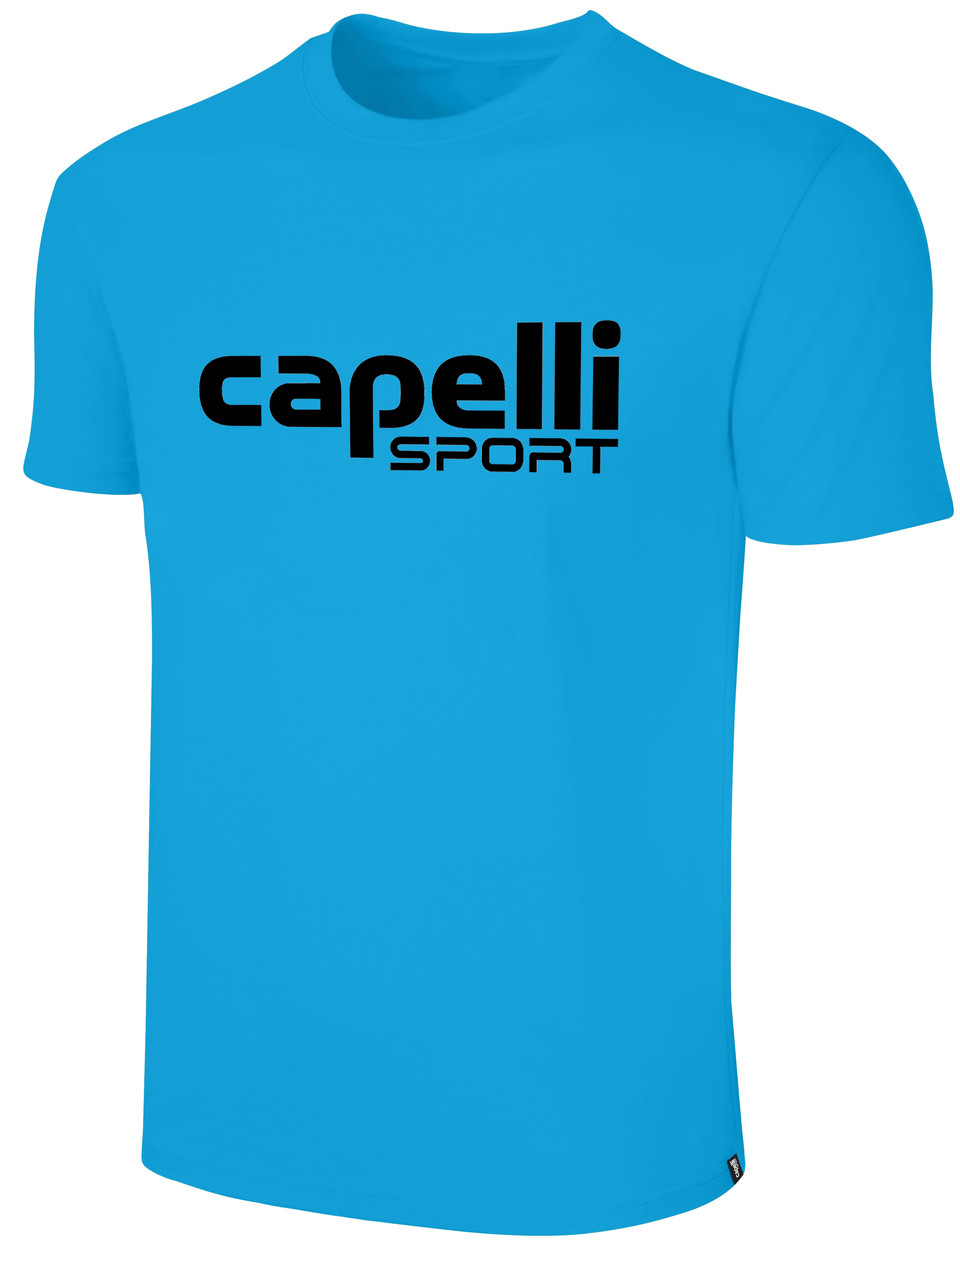 Capelli Sport T Shirt Bright Blue Capelli Sport